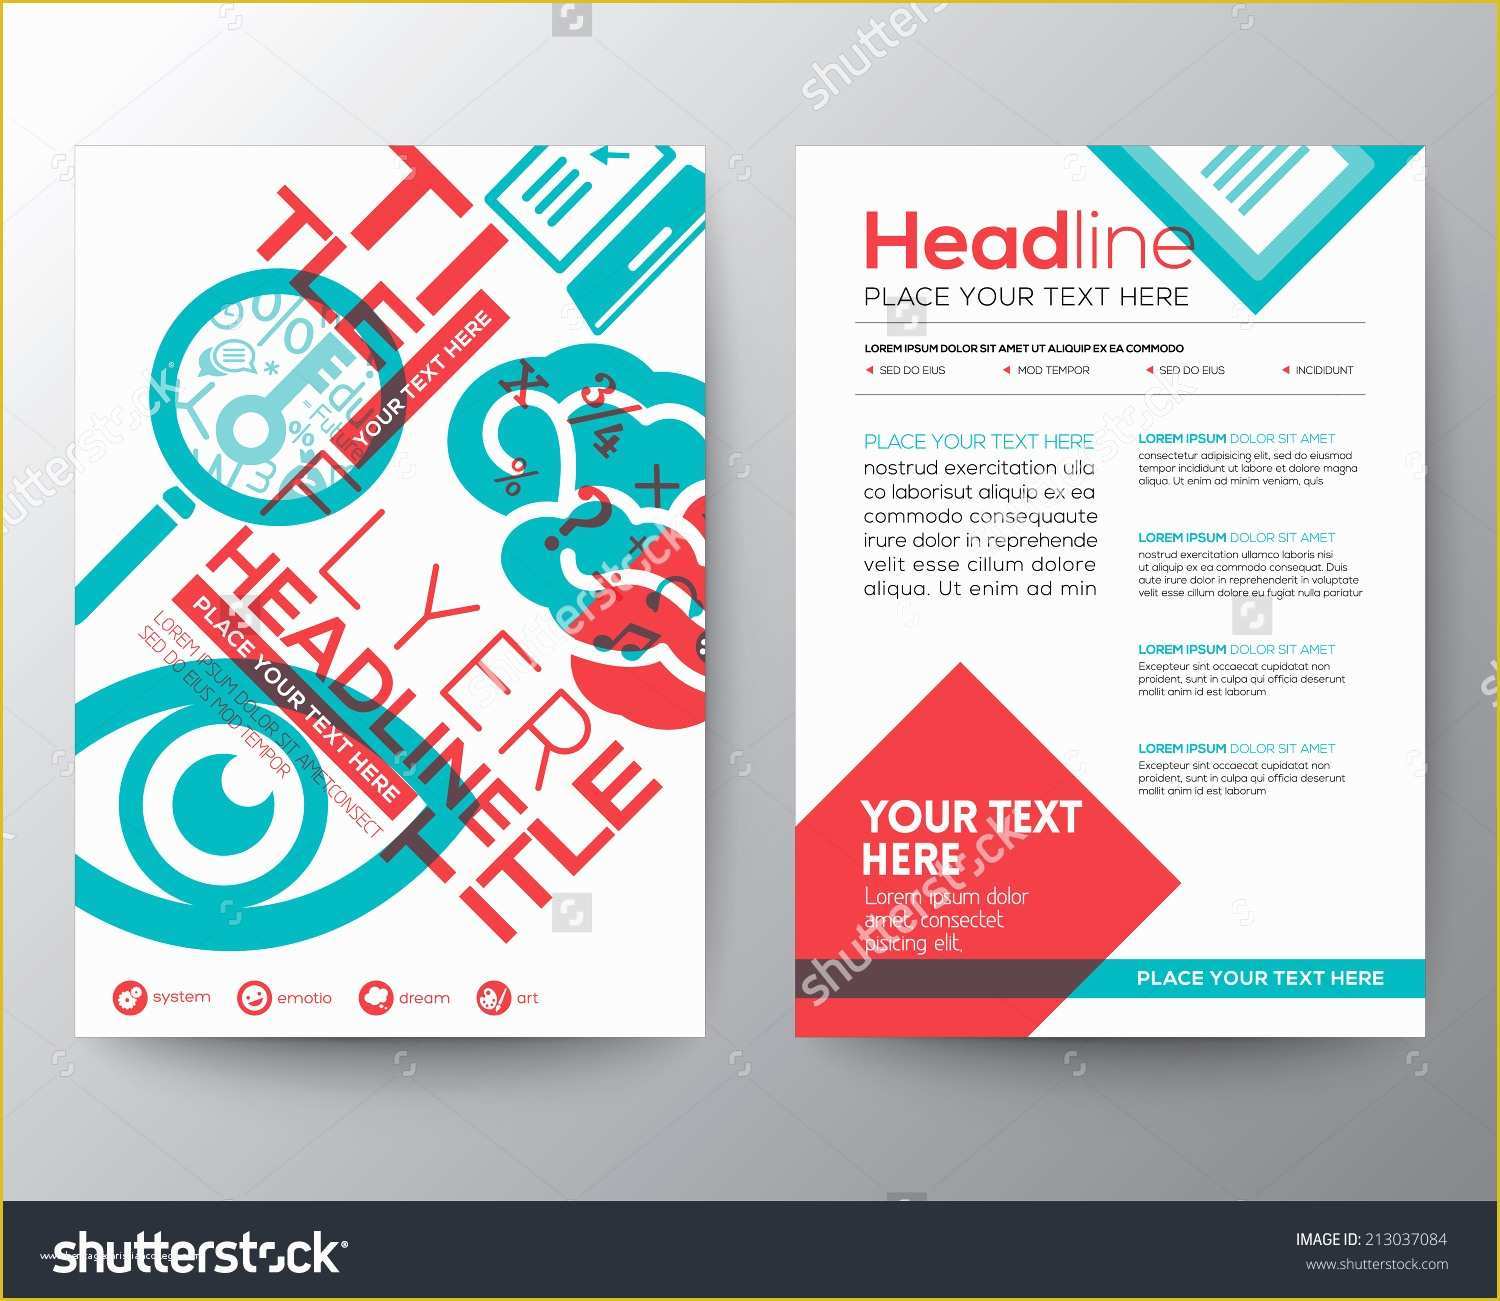 Free Flyer Brochure Templates Of Free Google Flyer Design Yourweek D1b3dceca25e